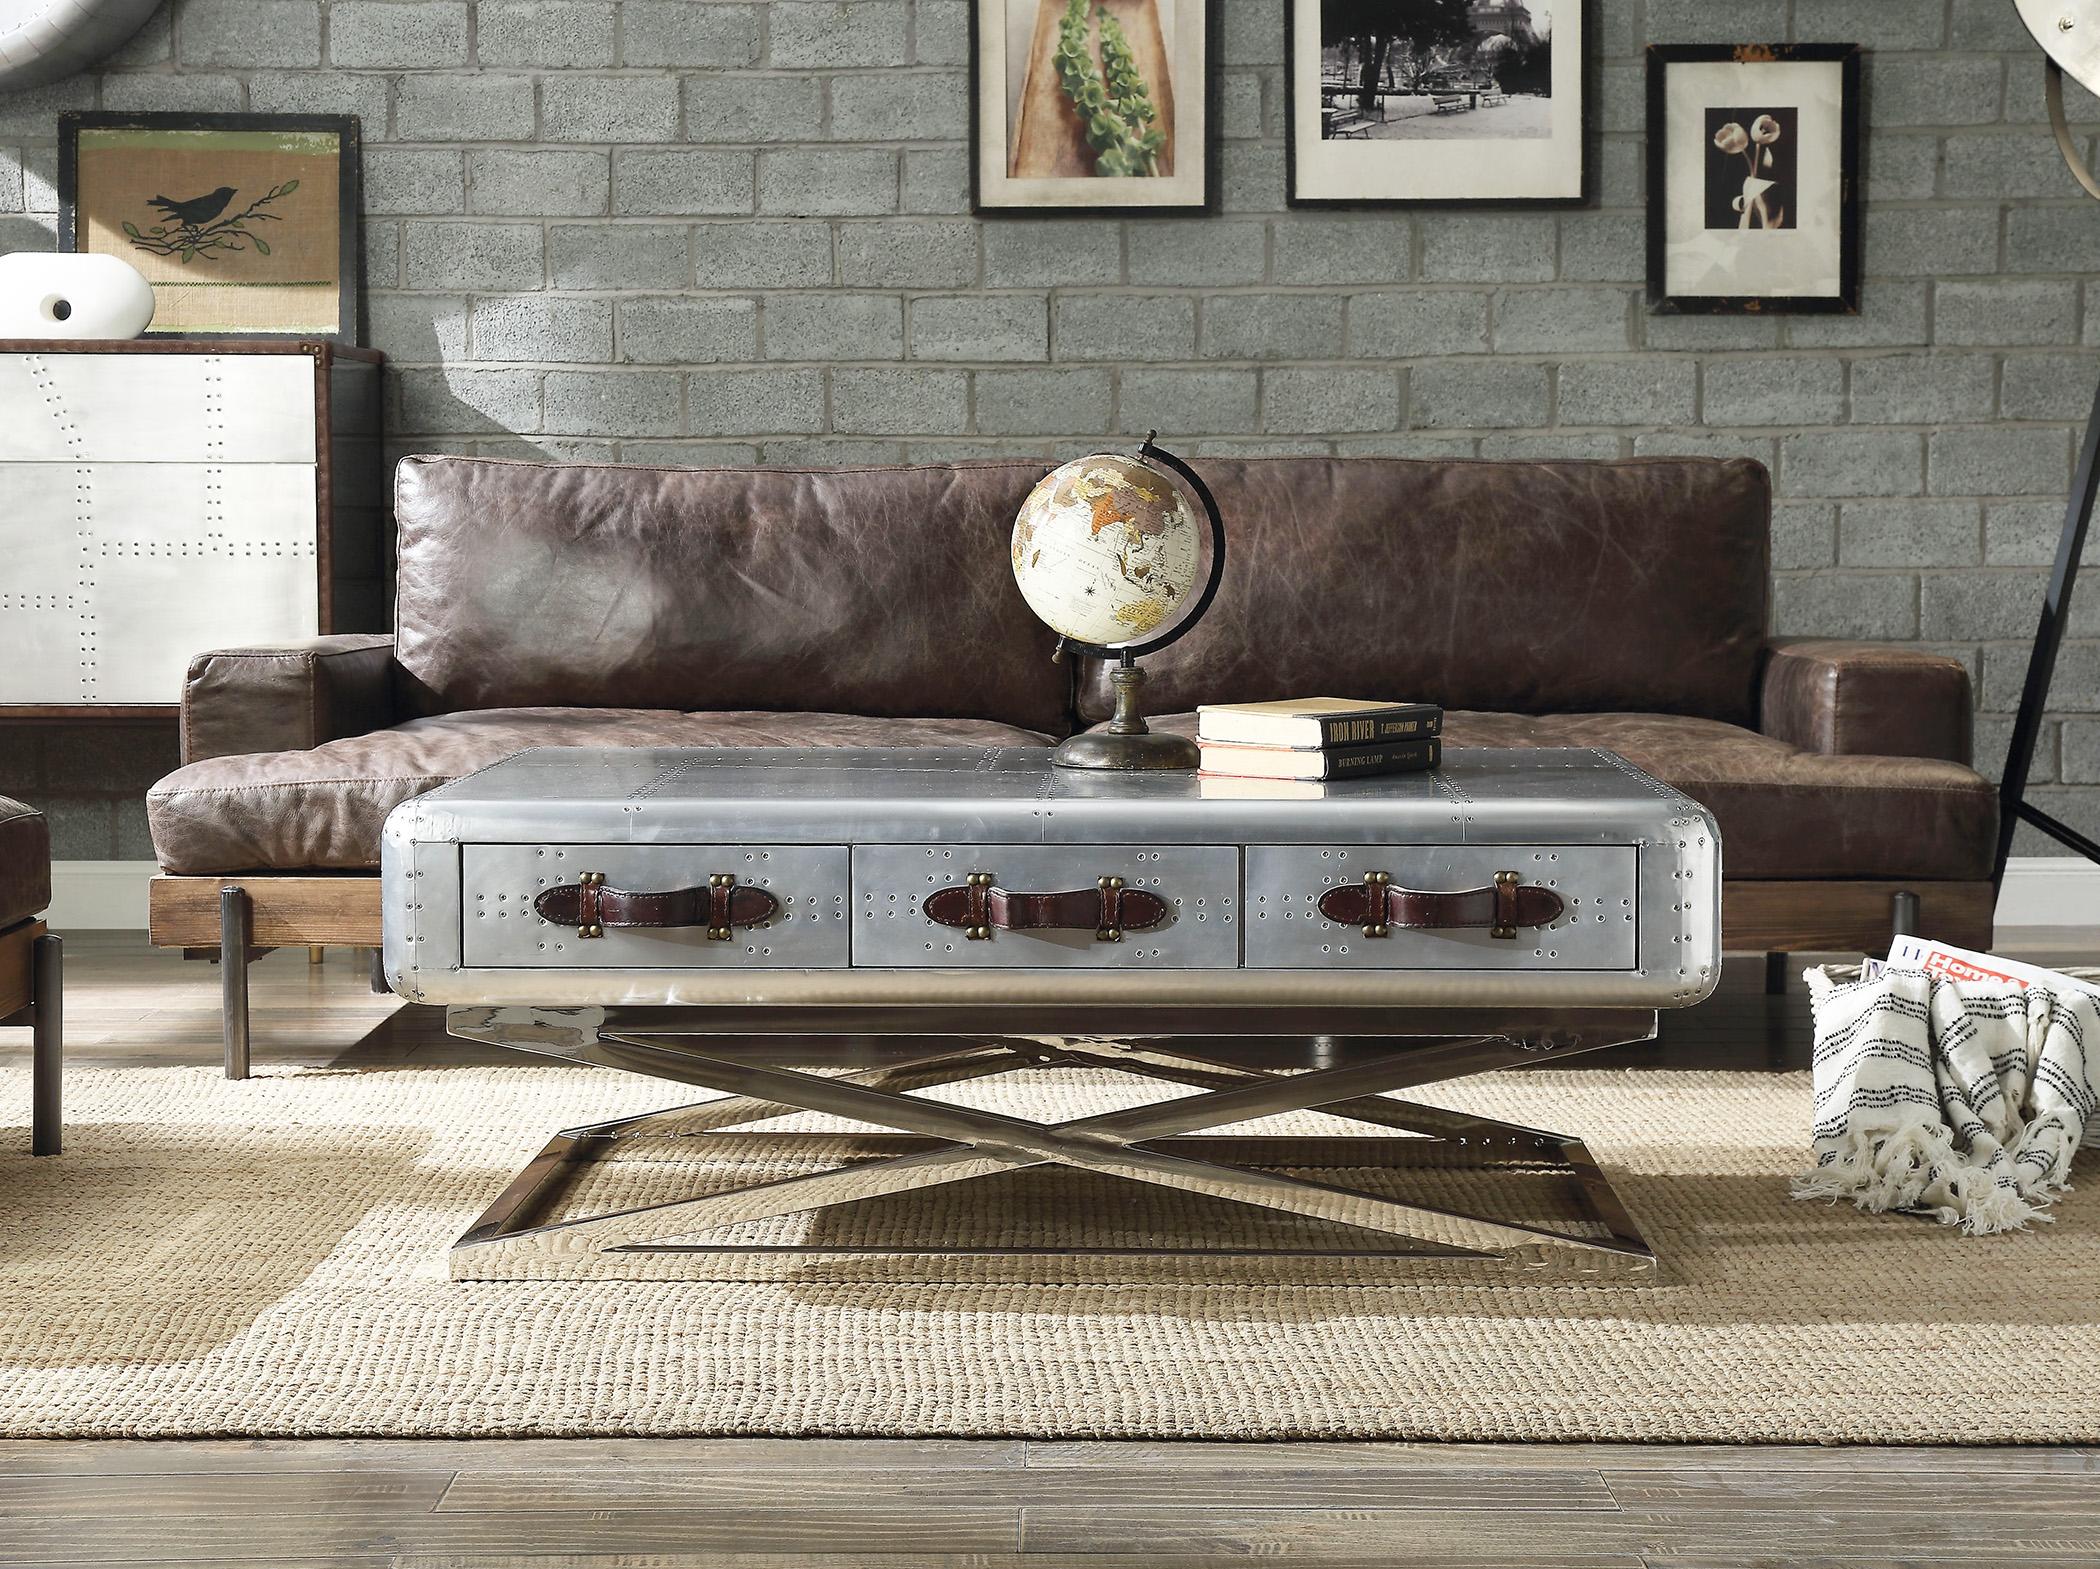 Acme Furniture Aberdeen Vintage Dark Brown Leather Coffee Table